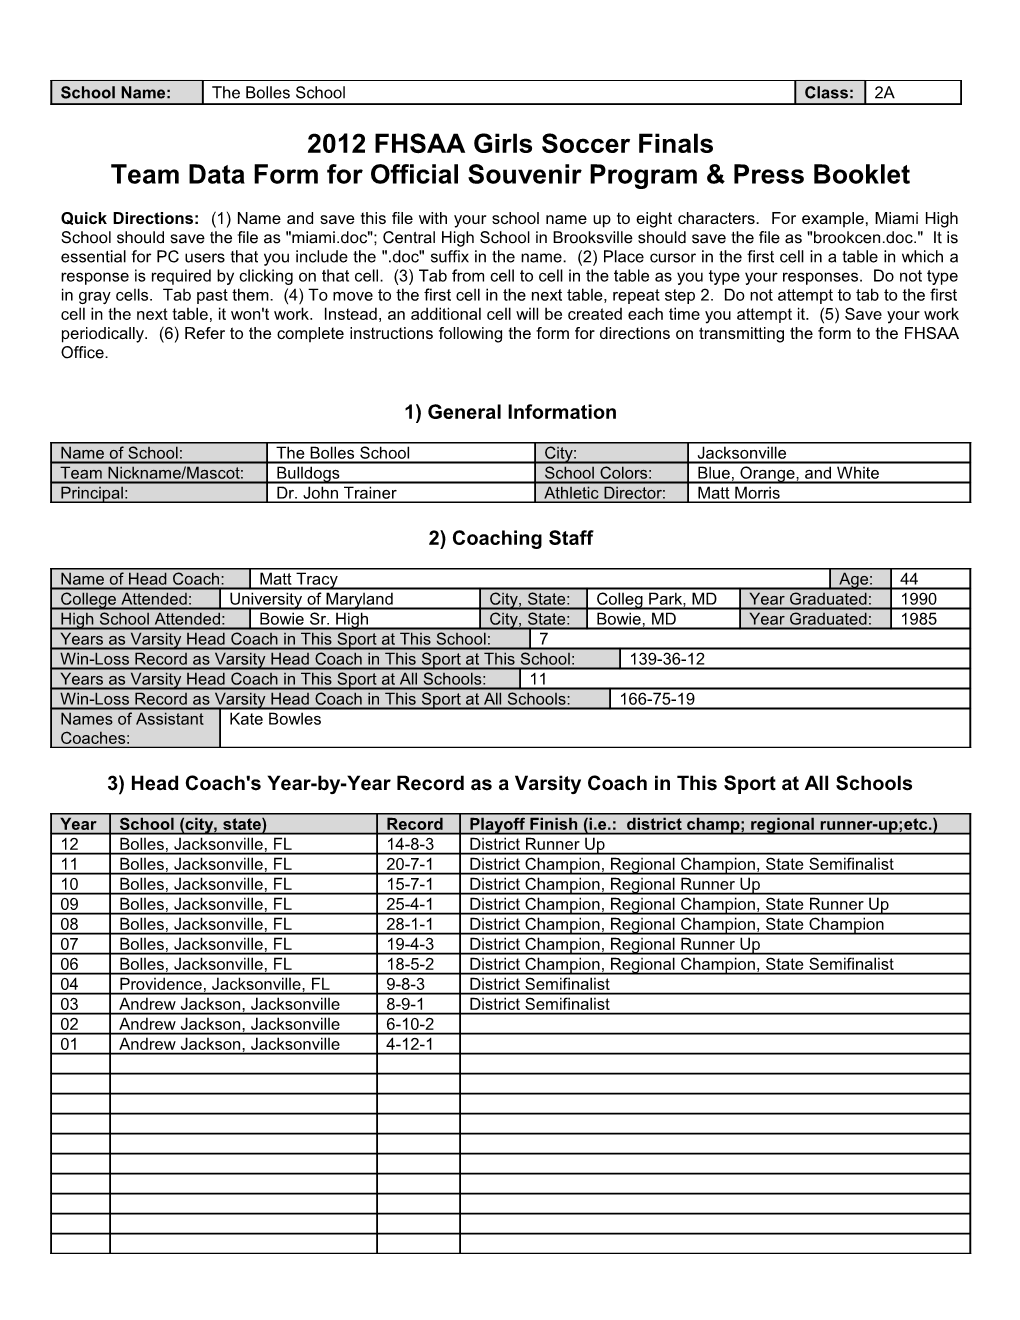 Team Data Form for Official Souvenir Program & Press Booklet s2